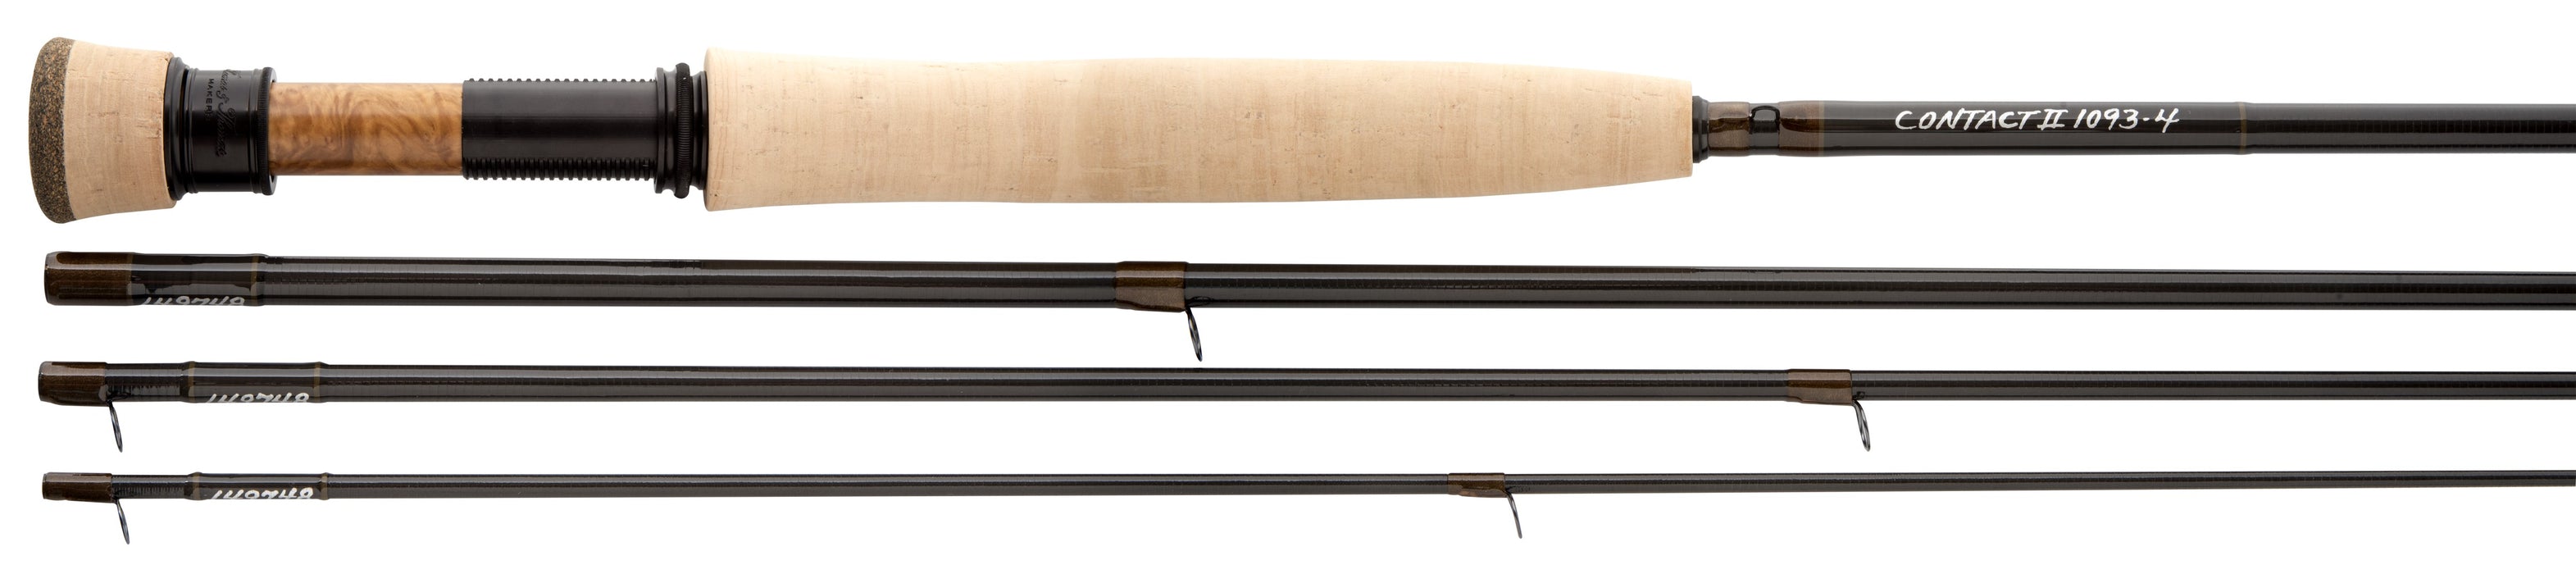 Vintage Fishing Rods (2E) Auction